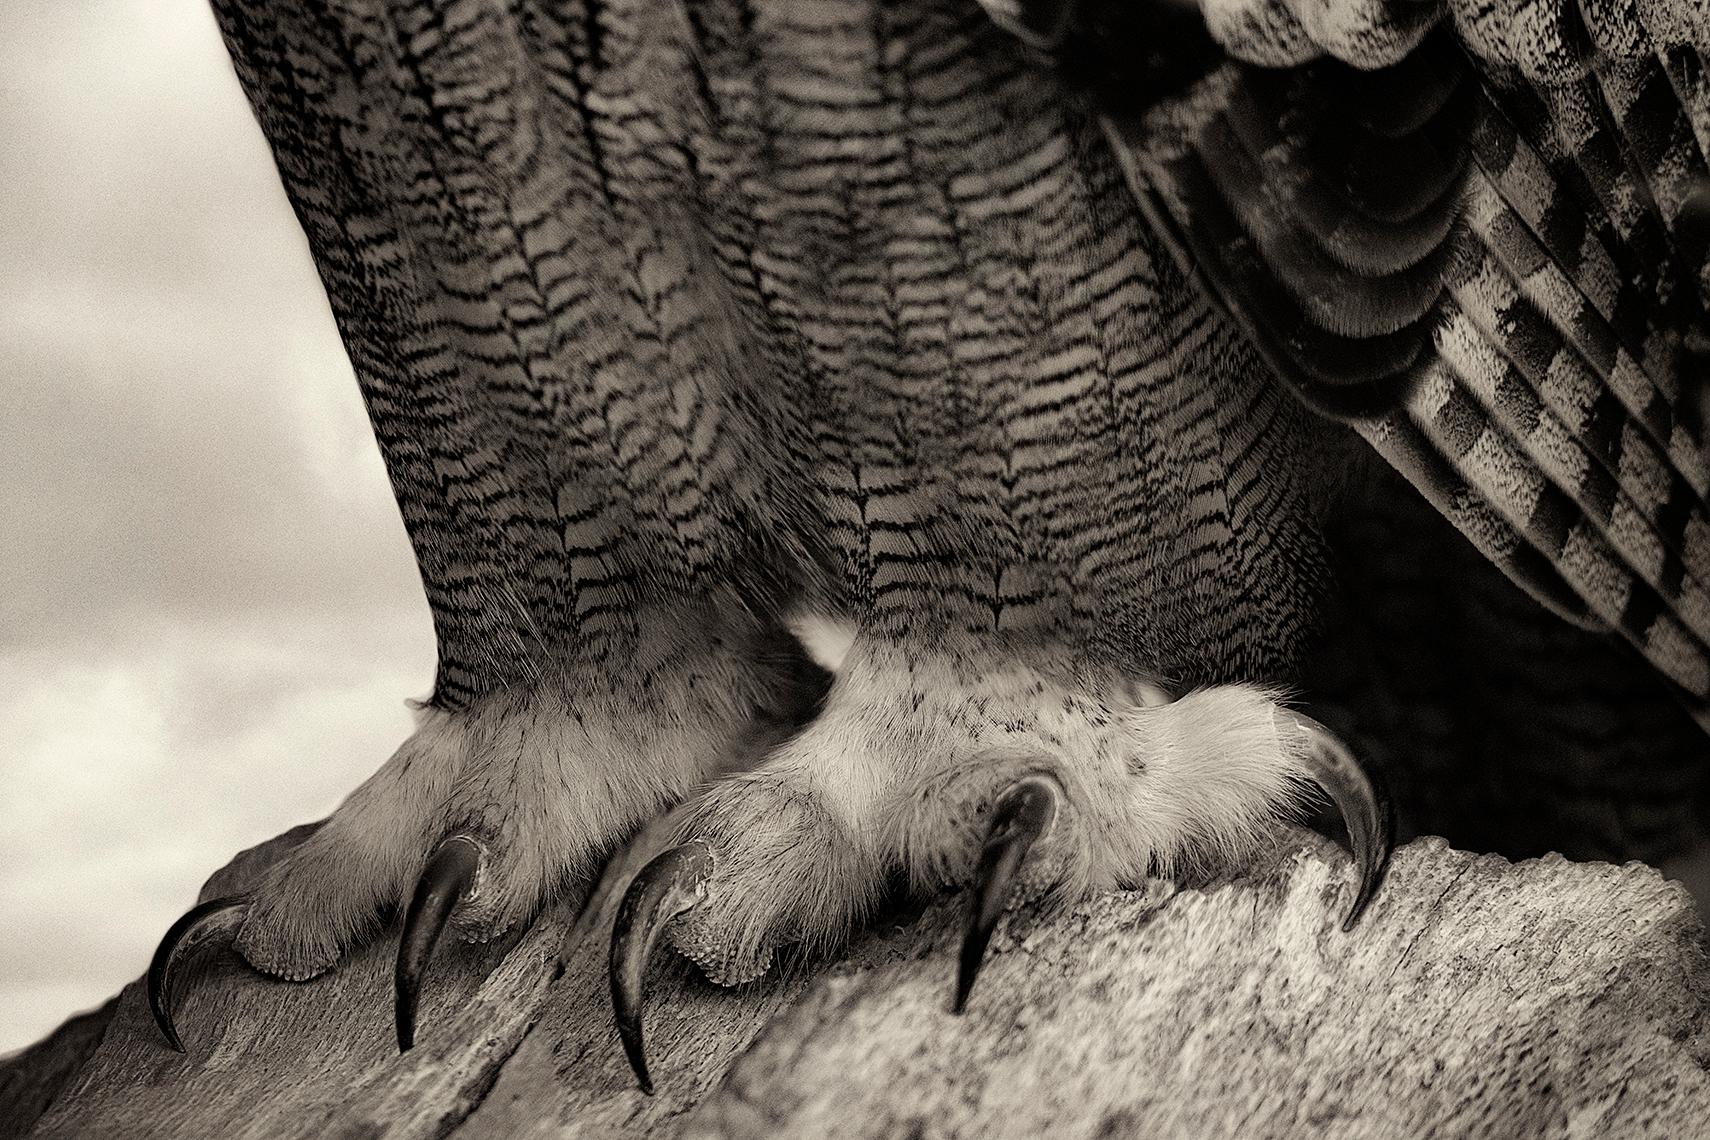 Beth Moon Black and White Photograph – Eagle Owl Feet, Fotografie in limitierter Auflage, signiert, Platin/Palladiumdruck